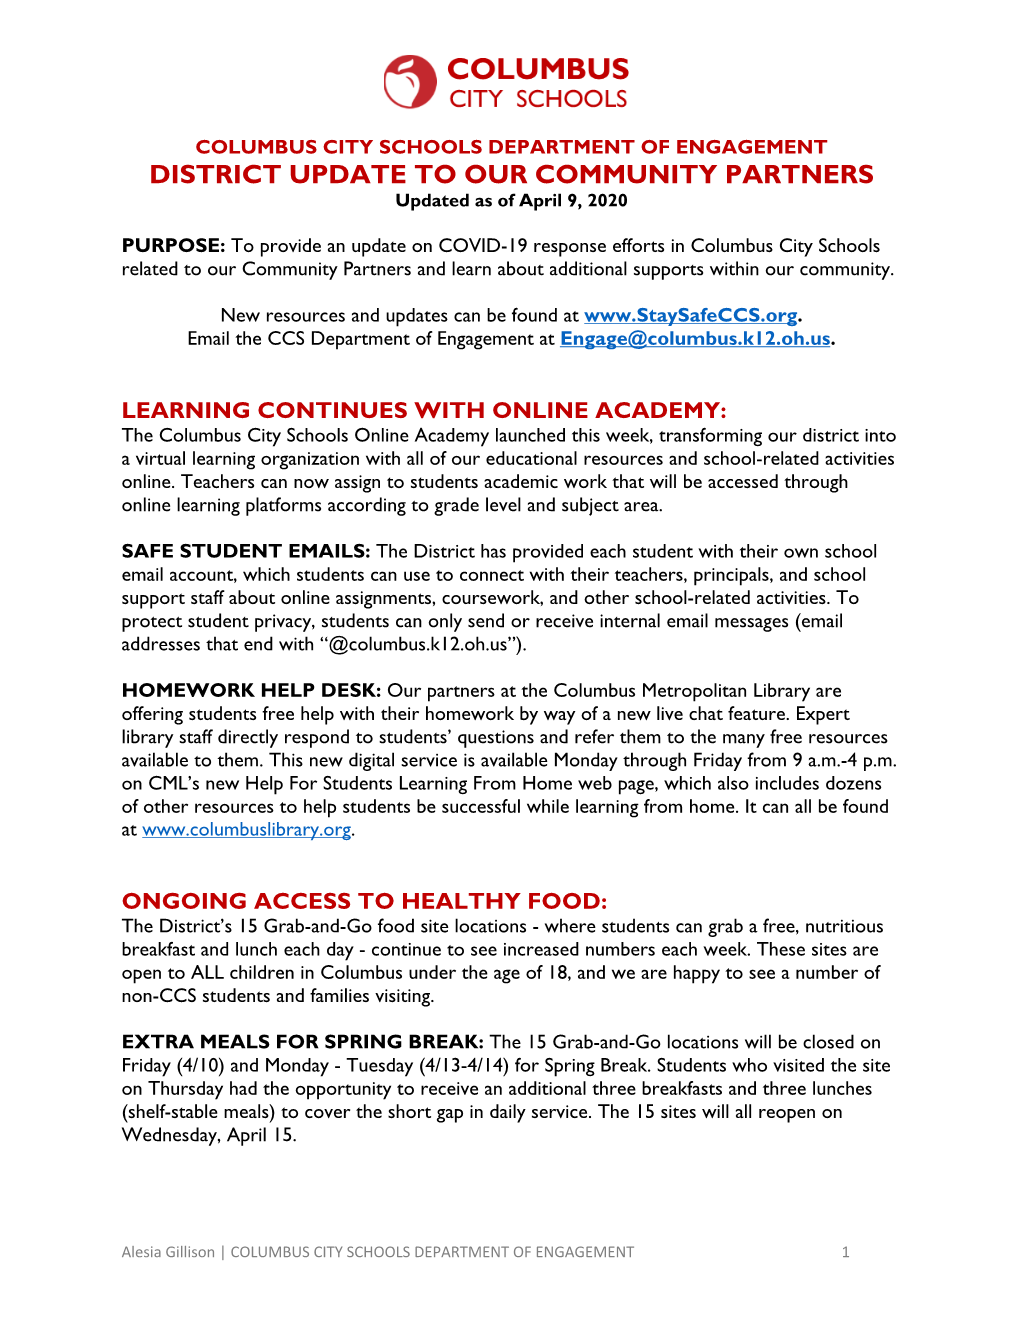 CCS District Updates